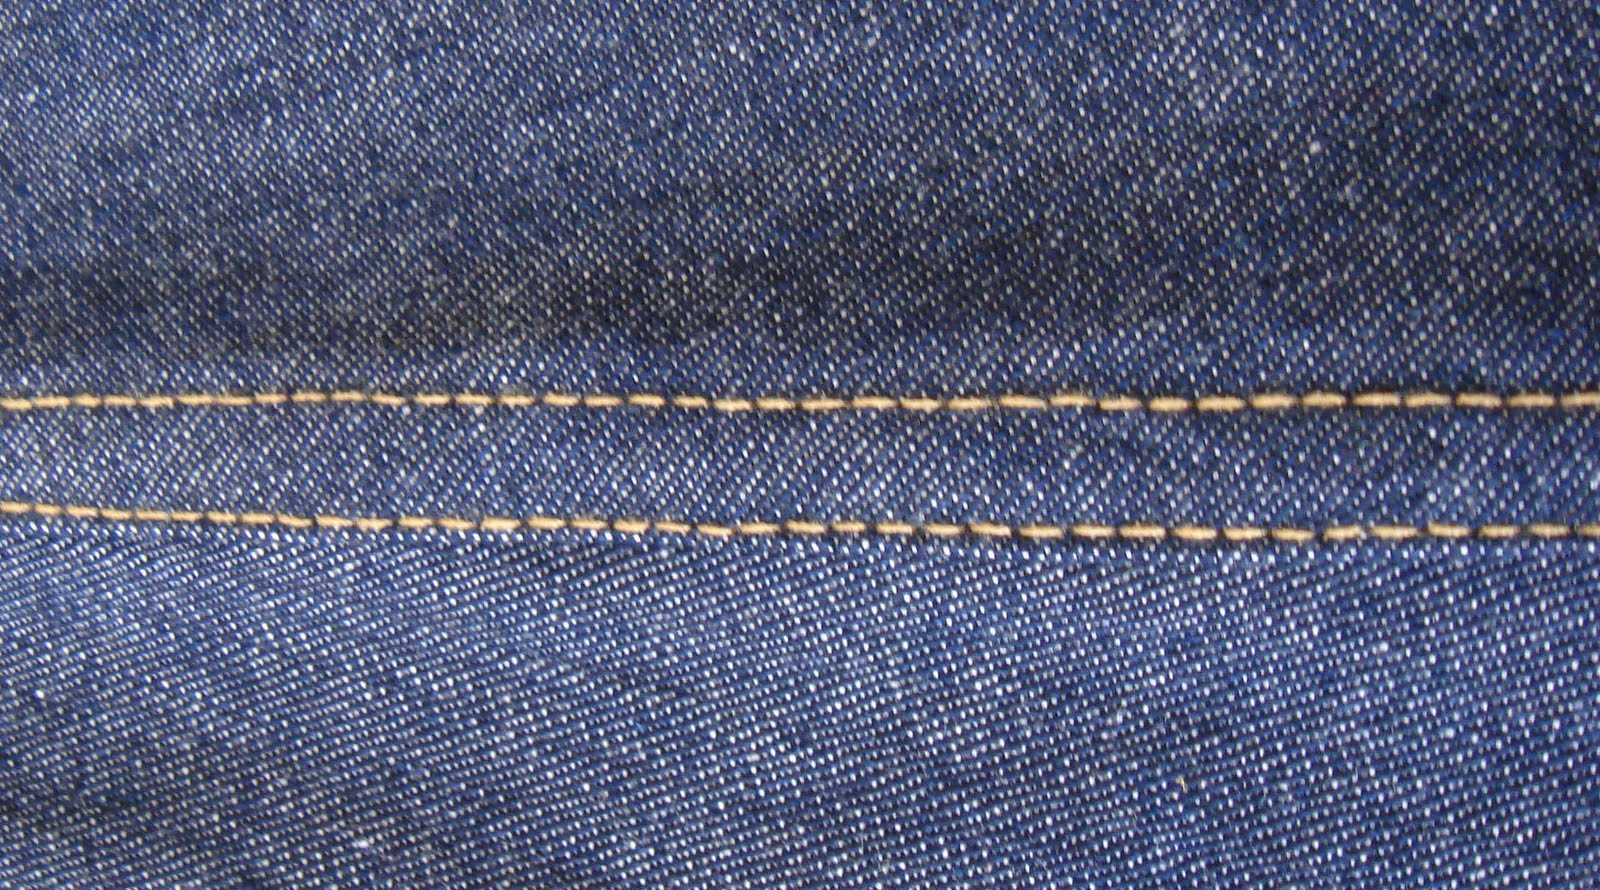 gunksdesigns: How to sew a flat felled seam